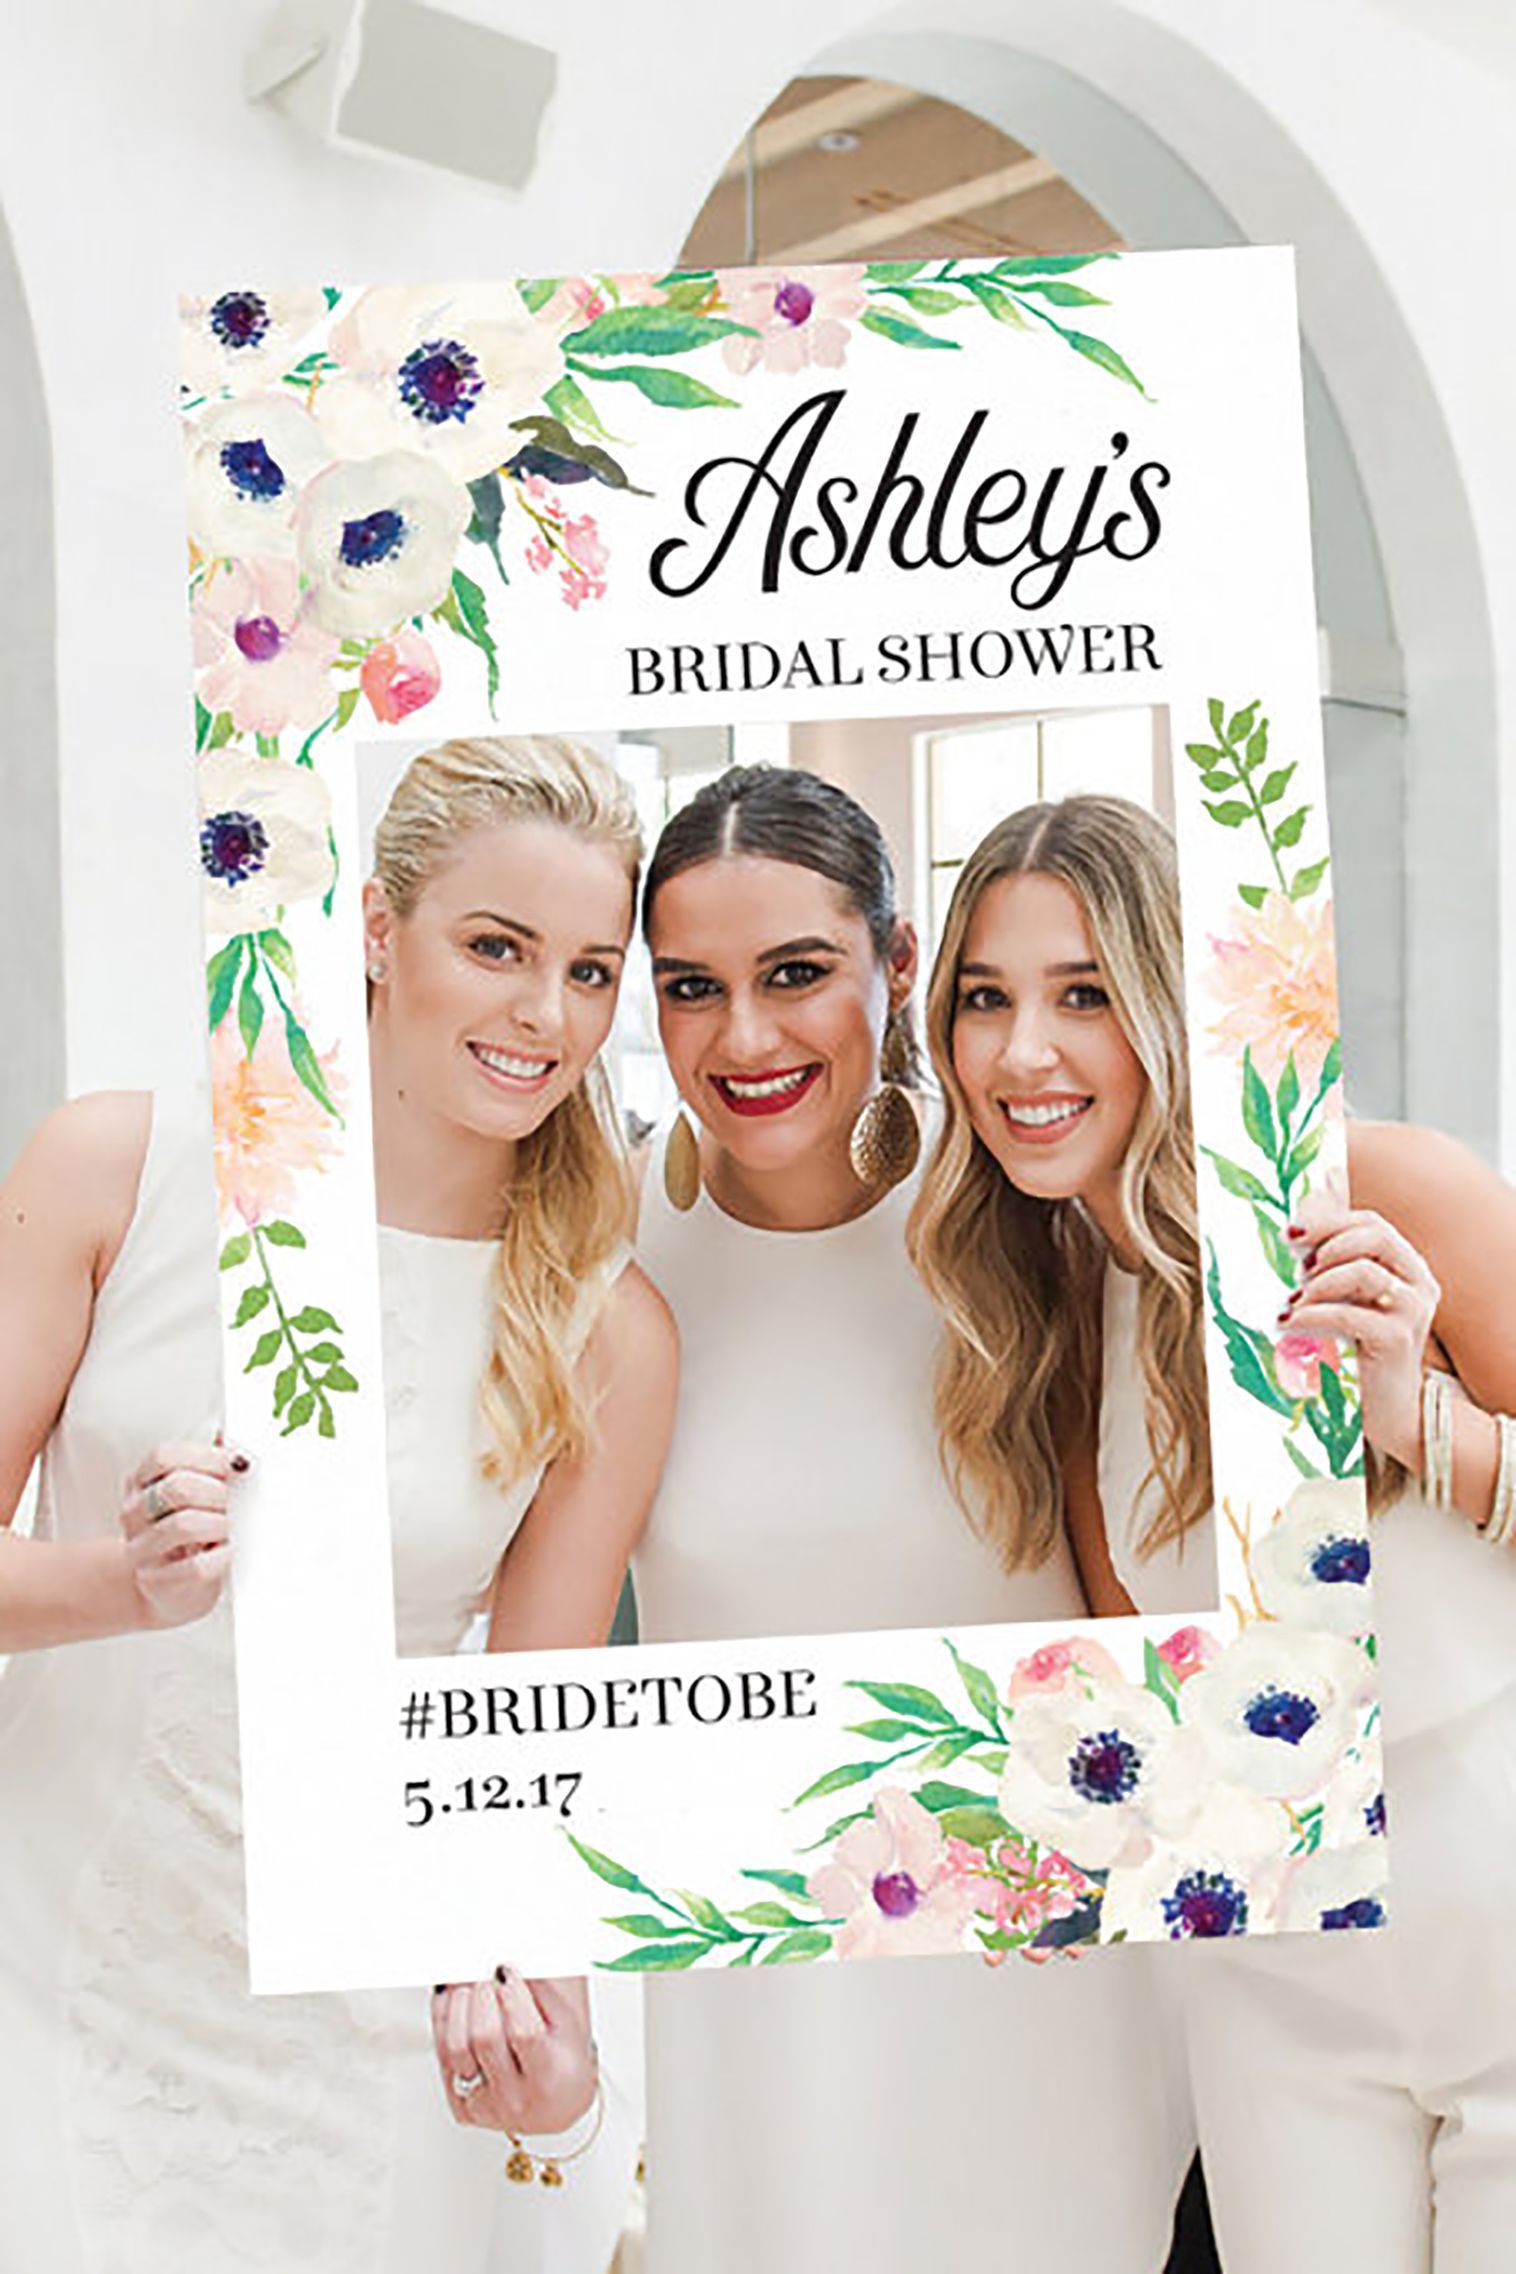 Super Fun Bridal Shower Ideas You Can’t Miss